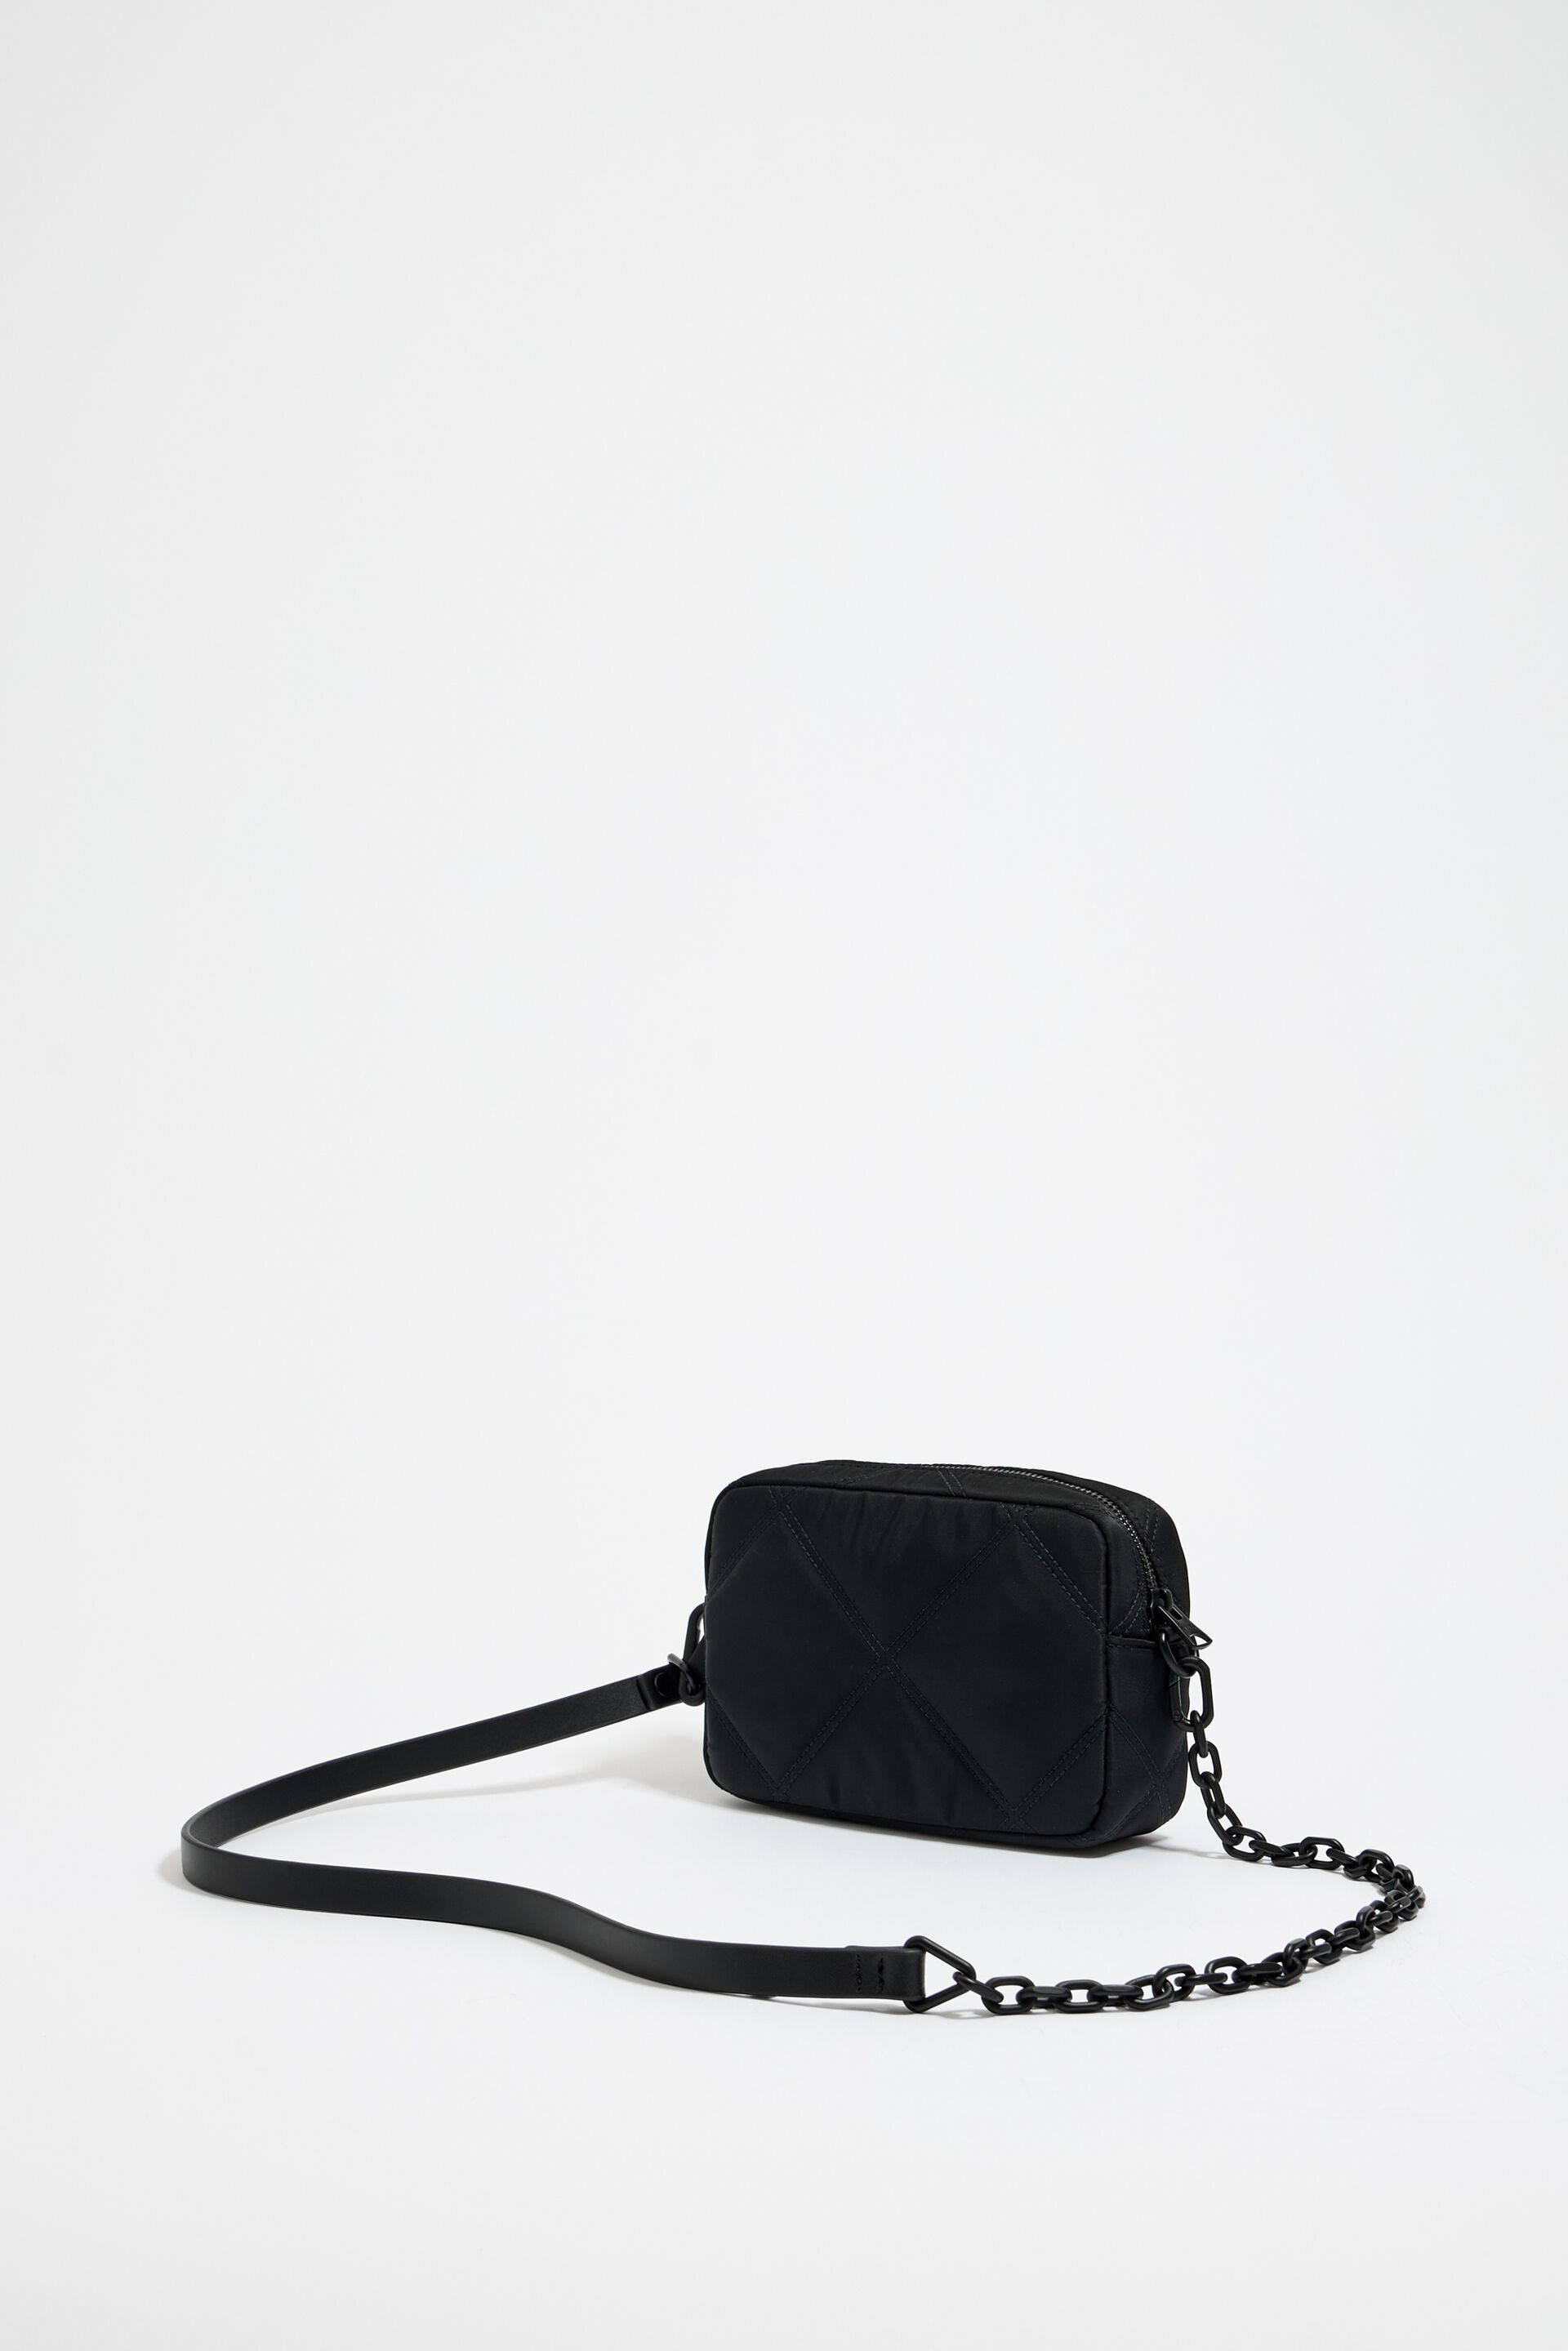 Shop bimba & lola S black nylon crossbody bag (231BBLJ1M.T2000) by